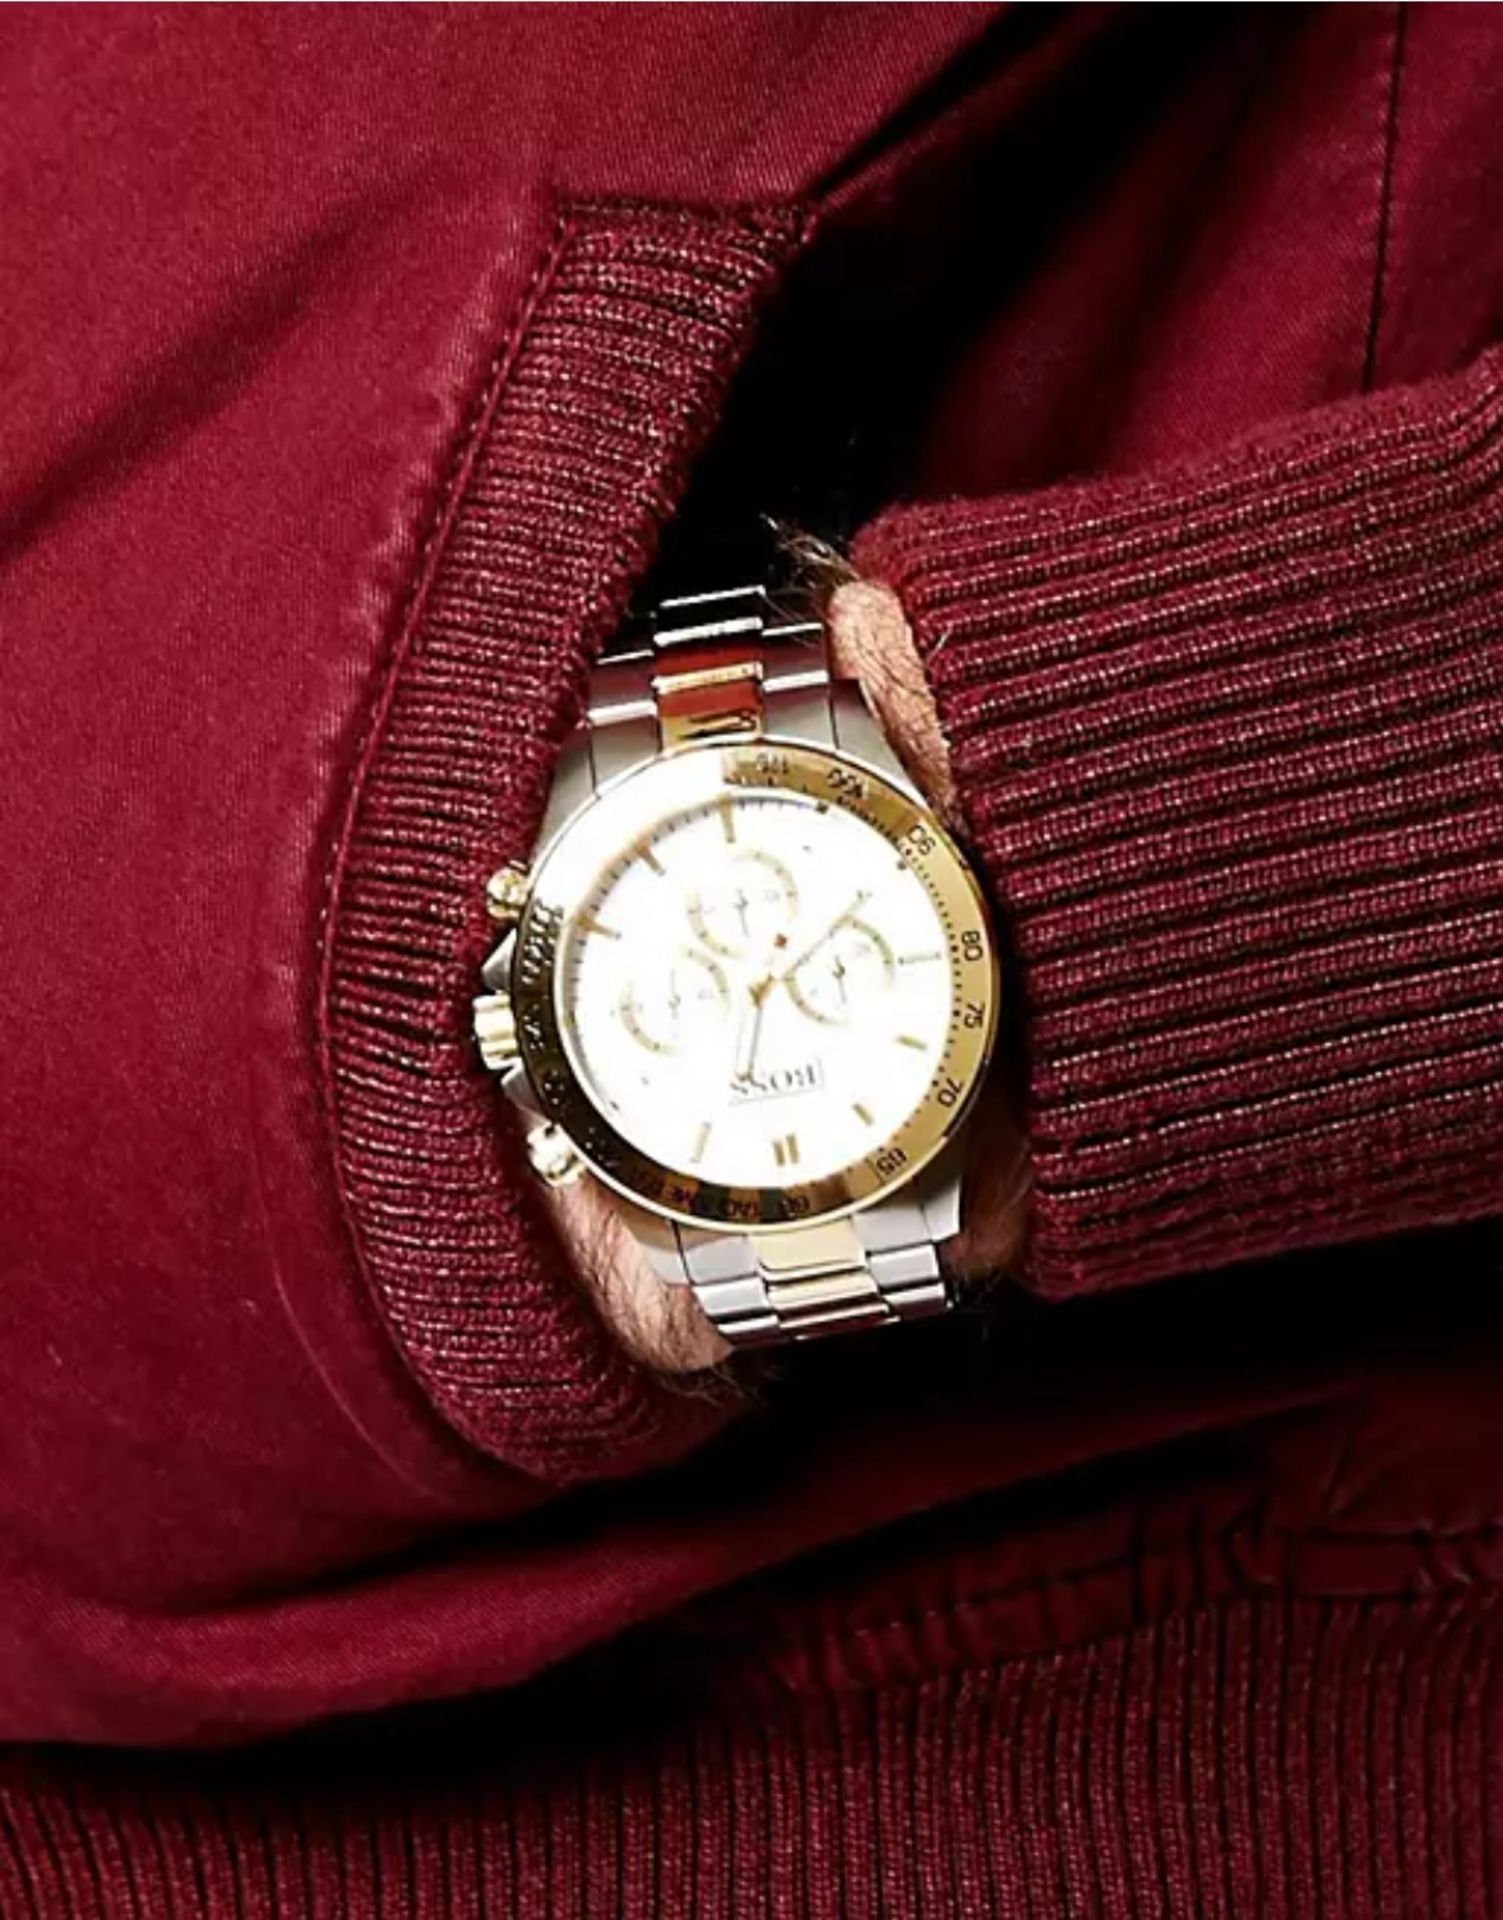 Hugo Boss 1512960 Men's Ikon Two Tone Gold & Silver Bracelet Chronograph Watch - Image 6 of 10